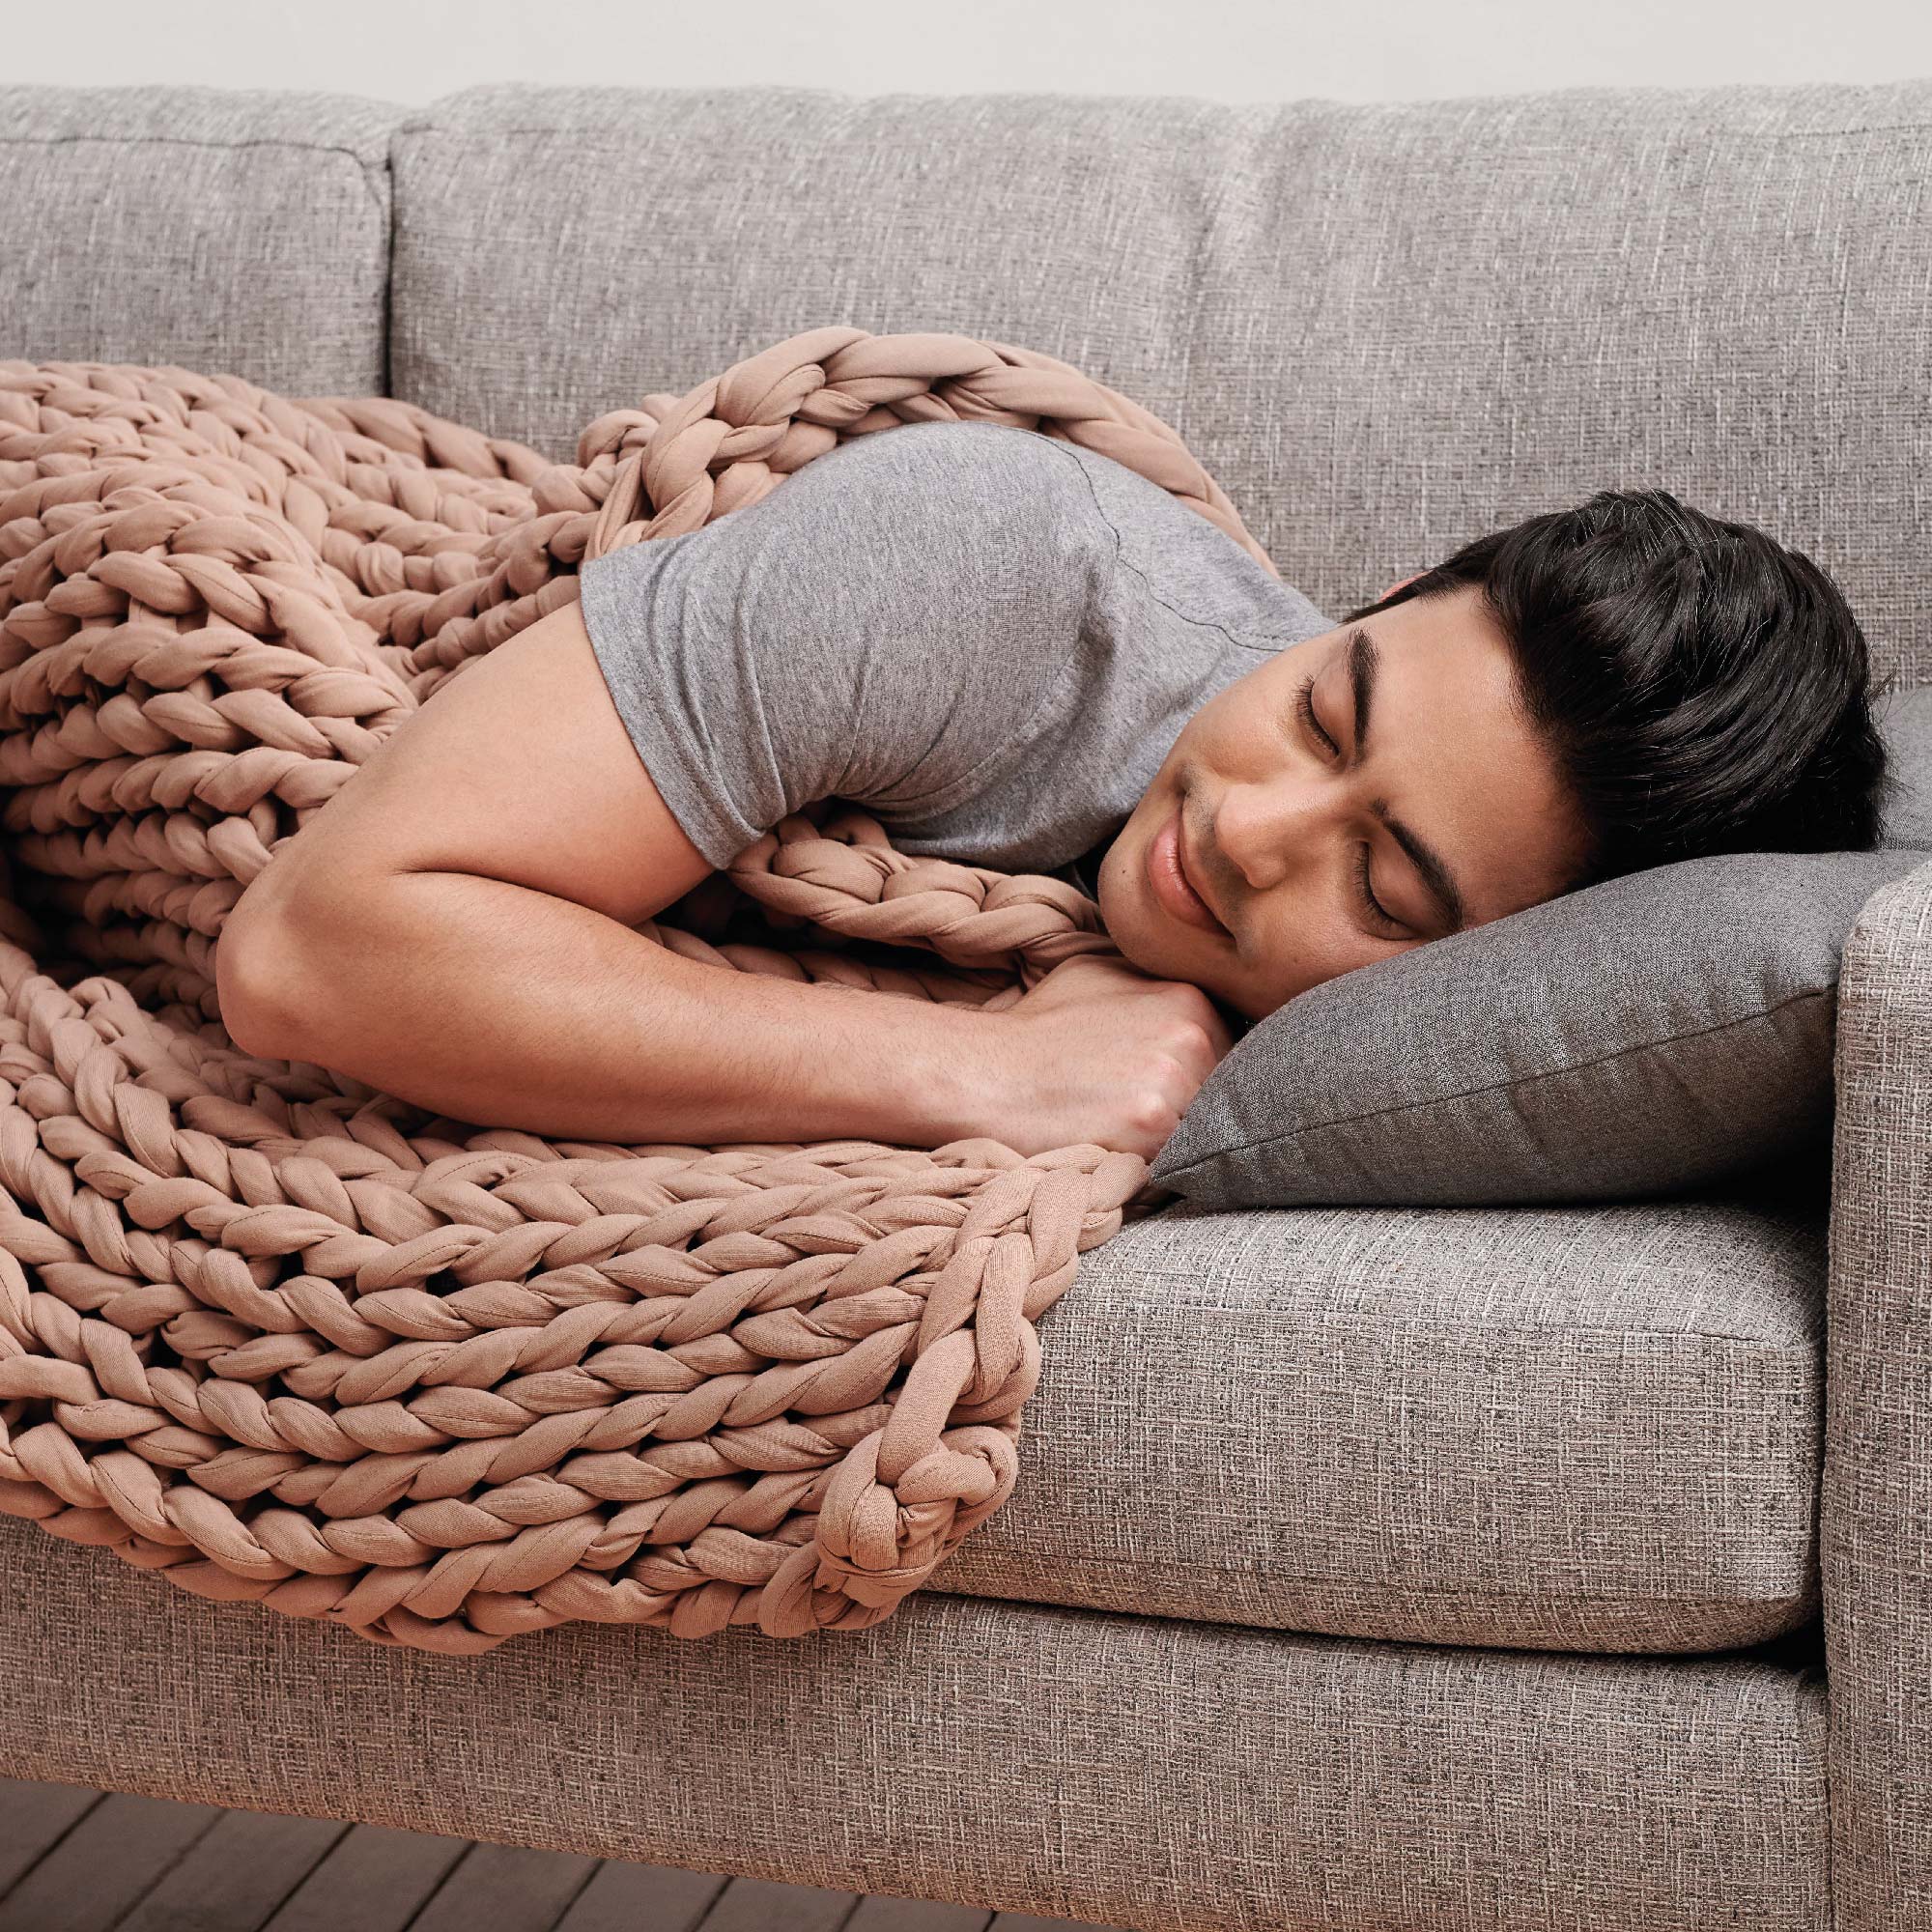 weighted blanket for sleep apnea